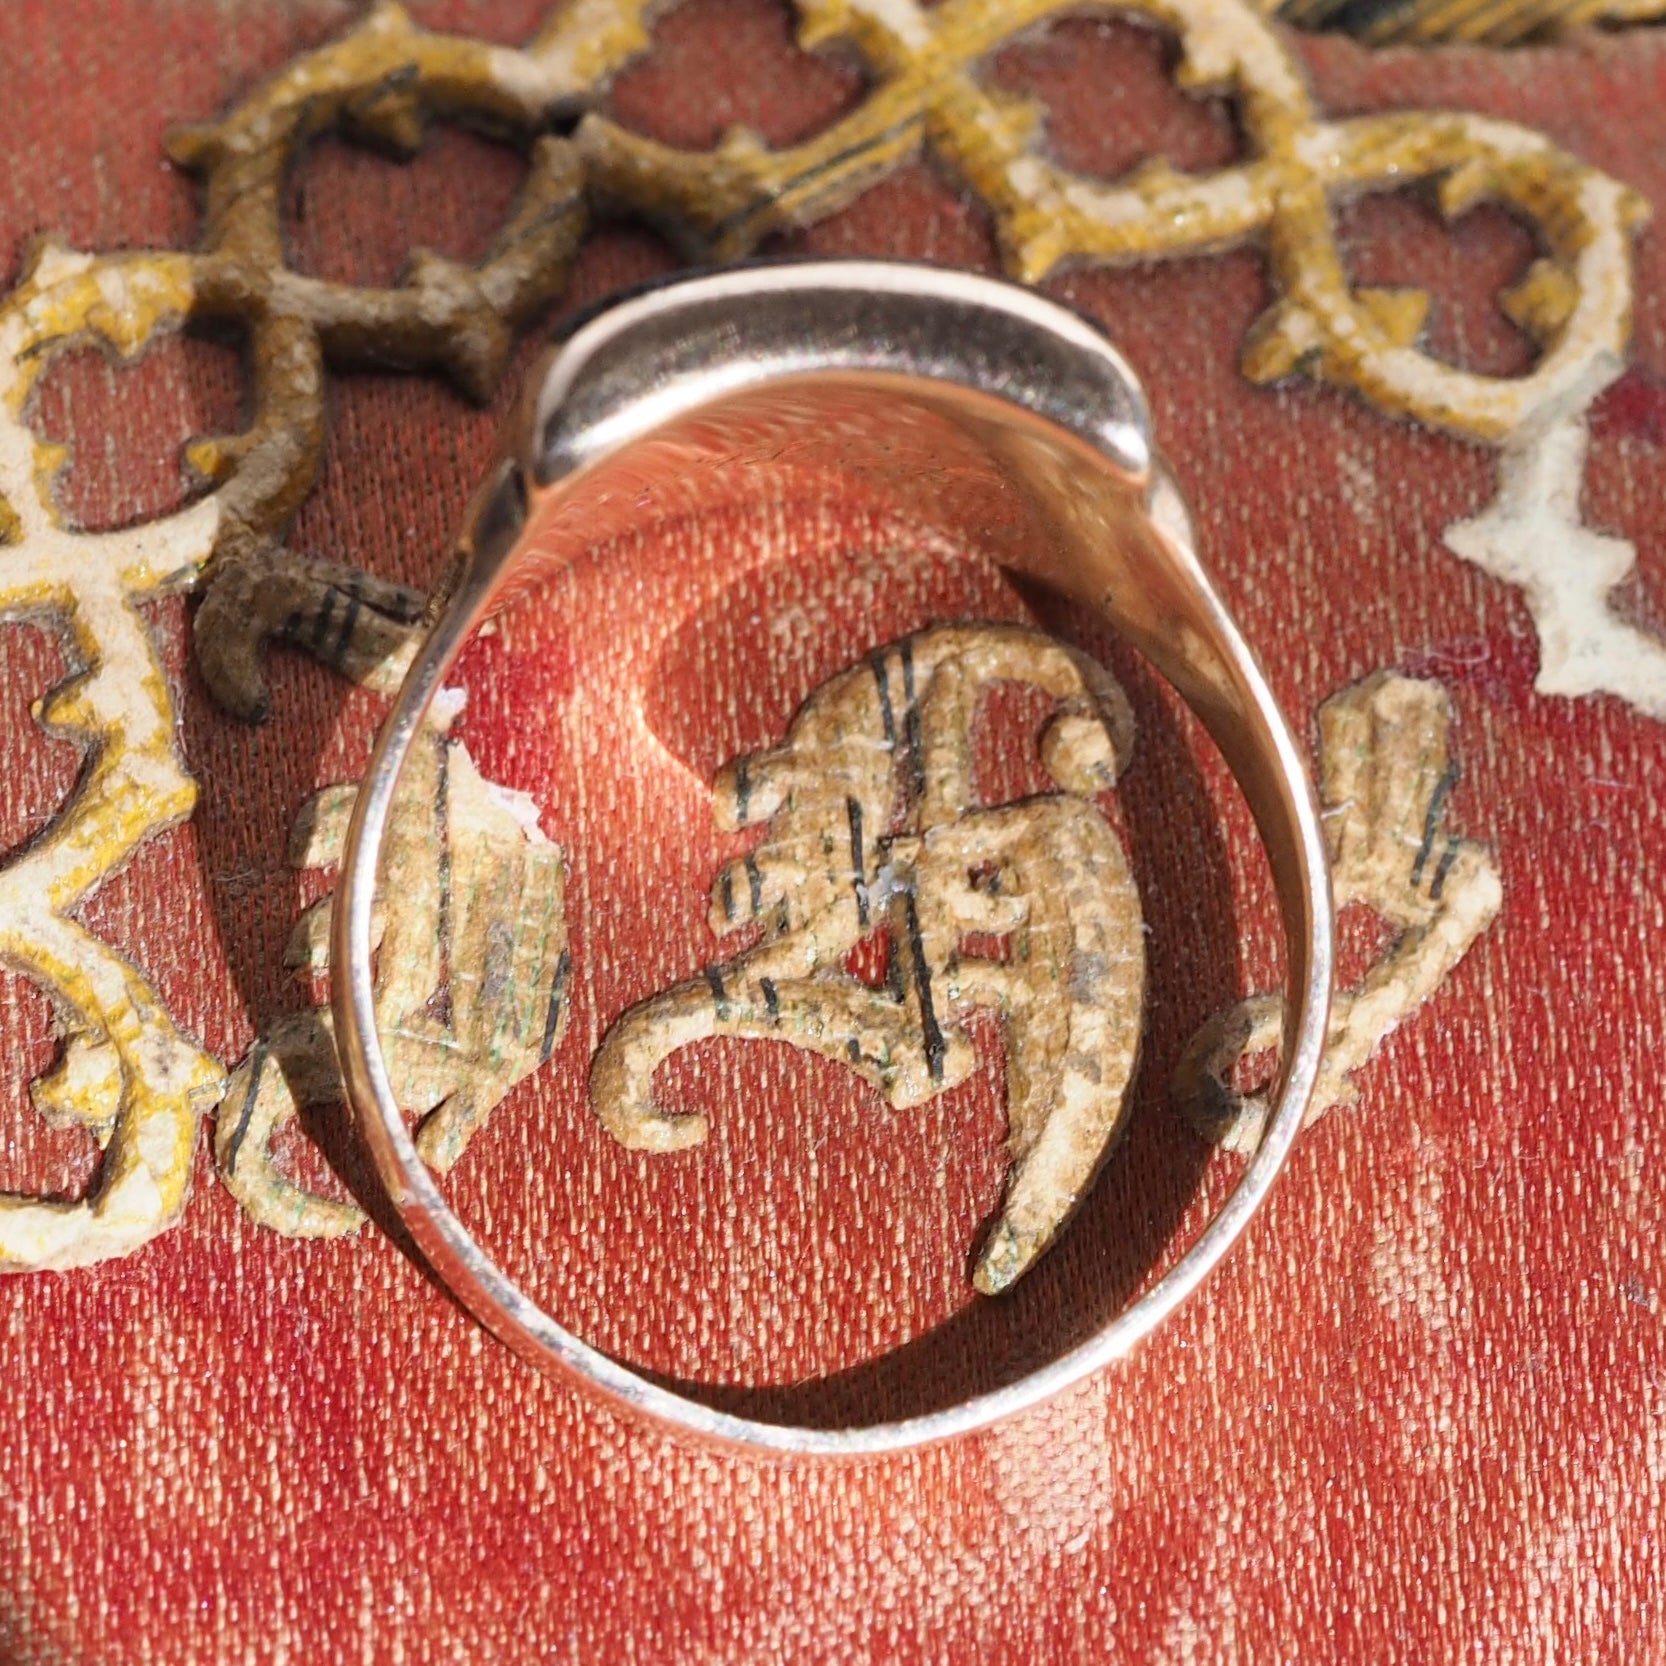 Antique Victorian 10k Gold Onyx Signet Ring